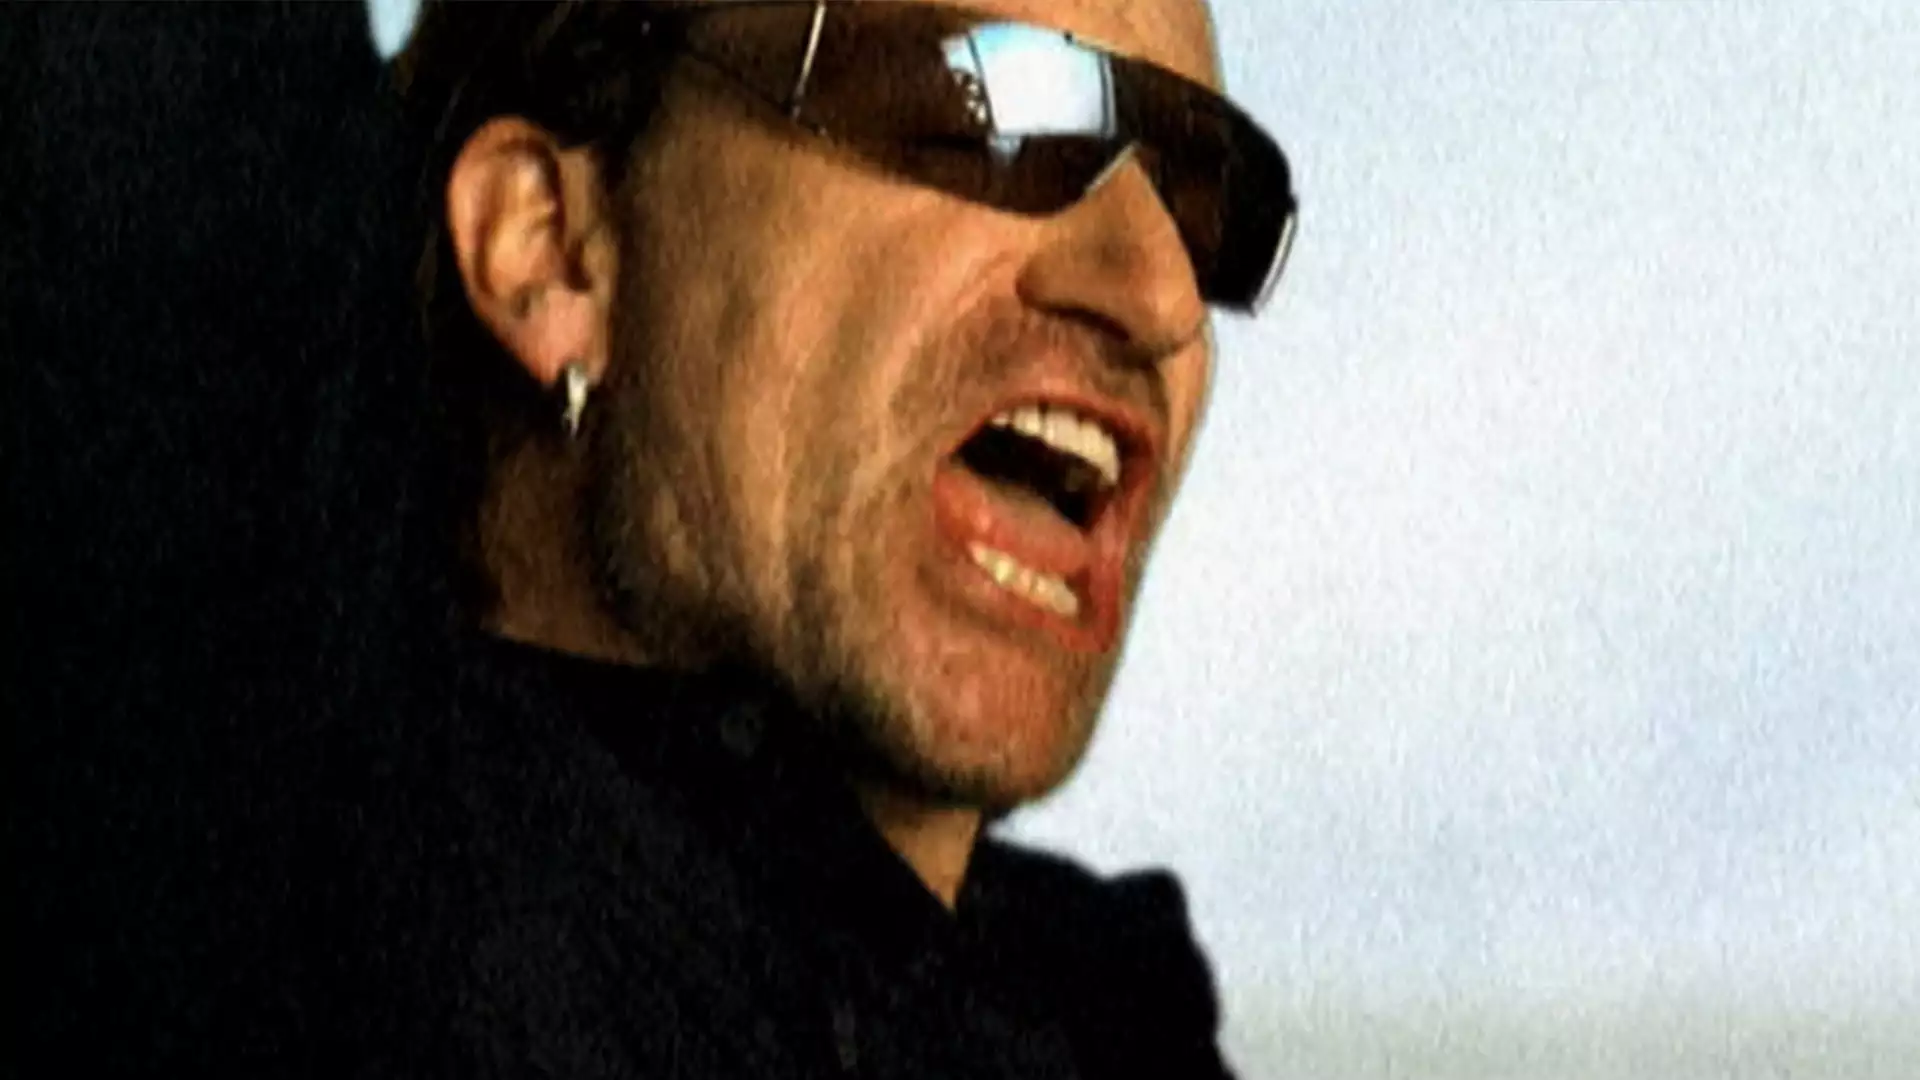 U2：ロック・レジェンズ